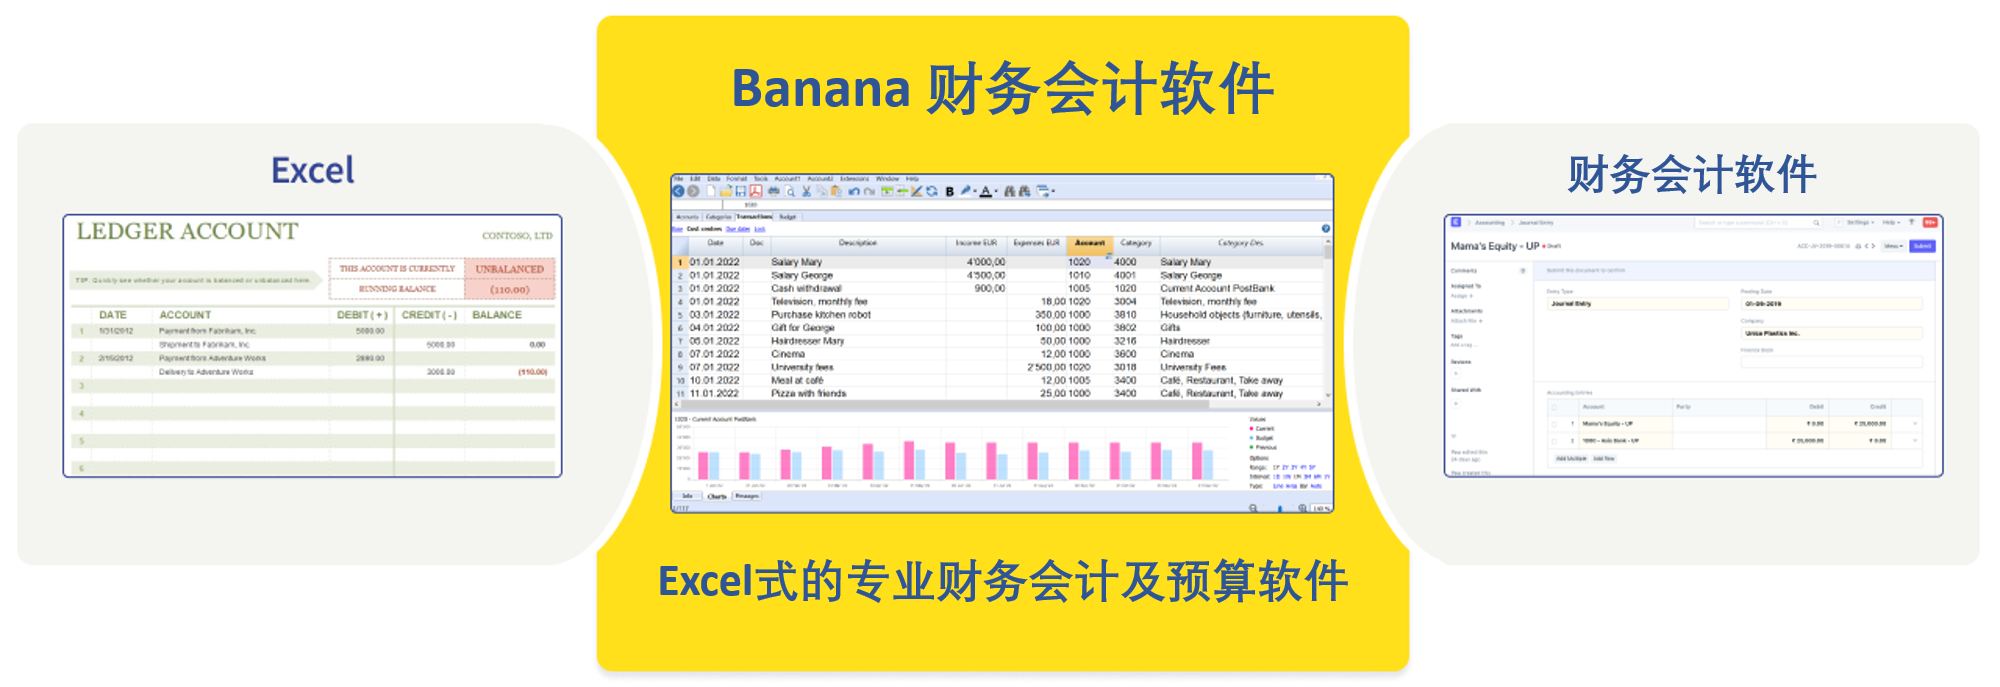 Scheme Banana Accounting sheets